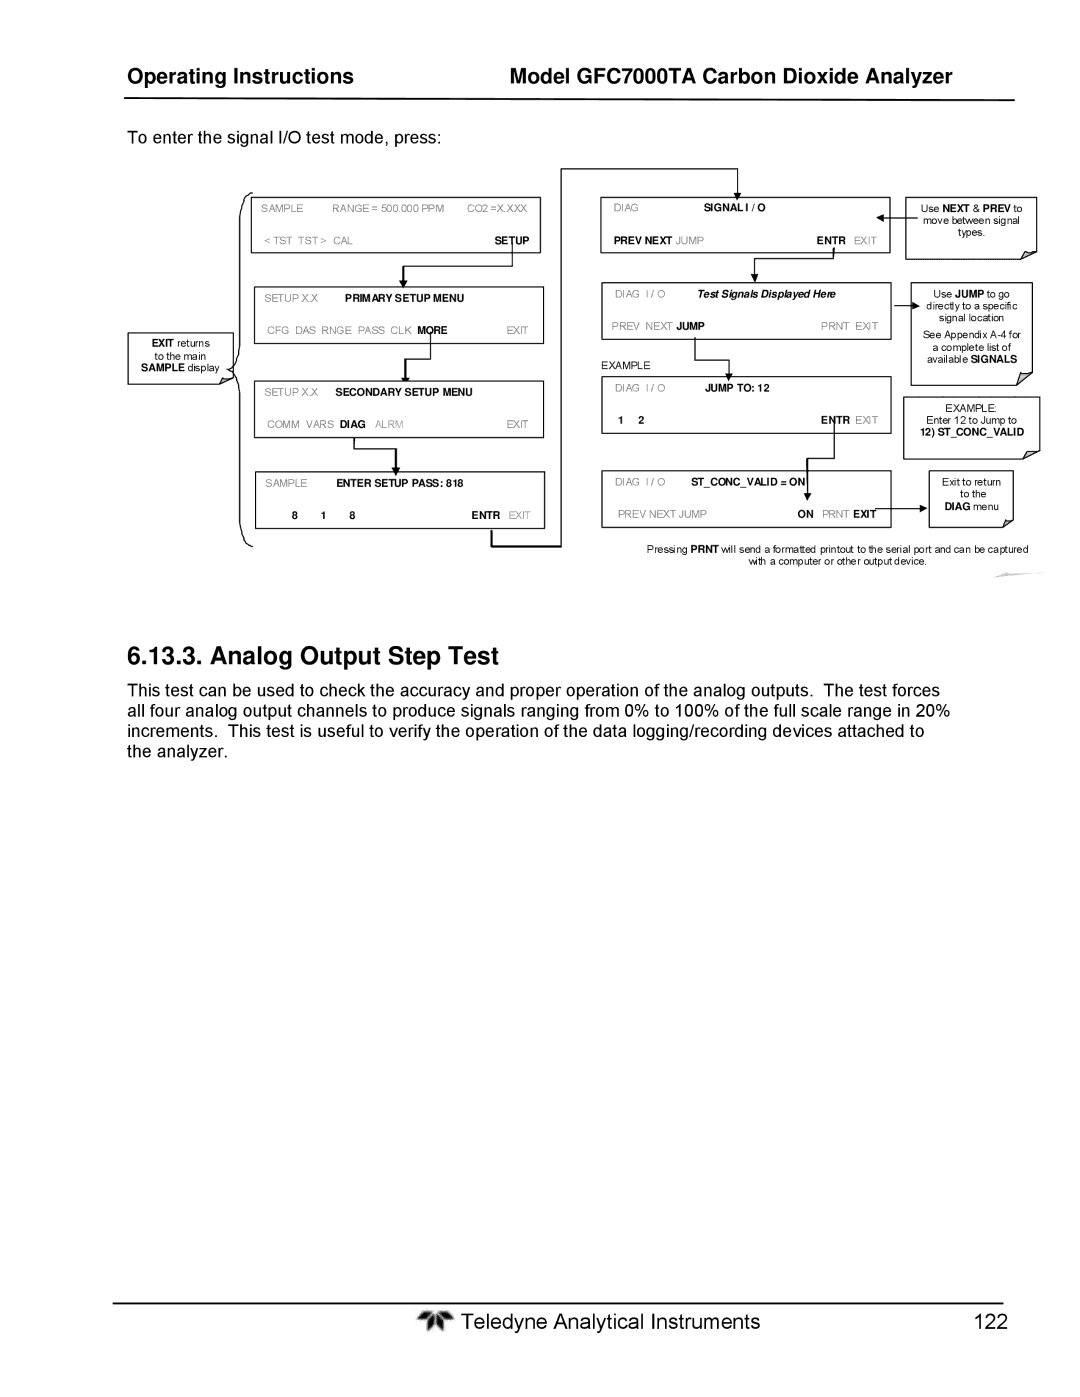 Teledyne gfc 7000ta operation manual Analog Output Step Test, To enter the signal I/O test mode, press 